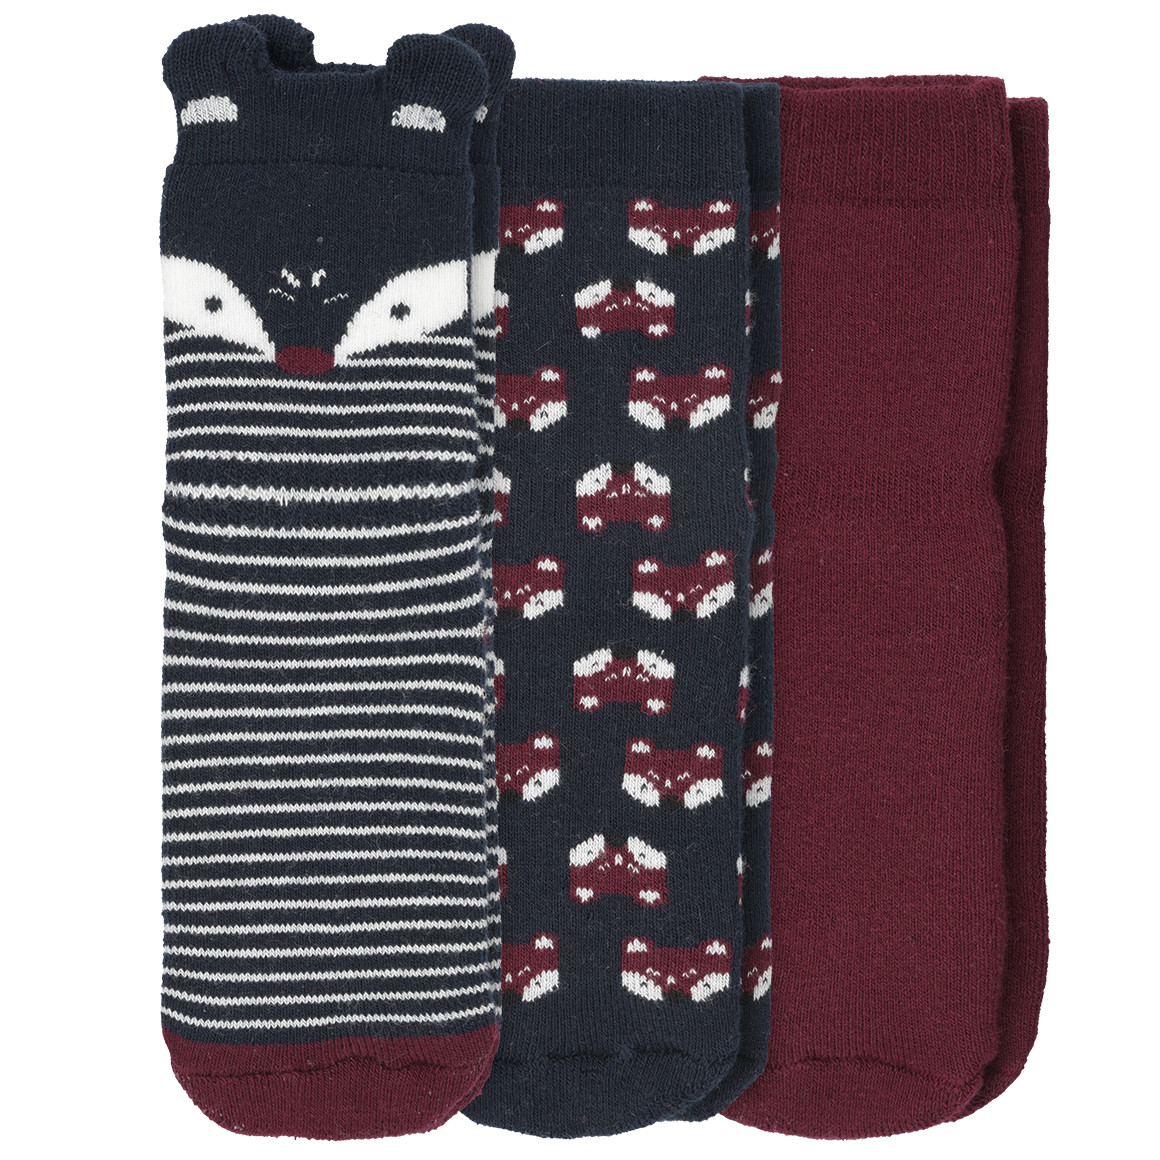 Adorel Baby Mädchen Anti-Rutsch Socken Warm Frottee 6er-Pack 